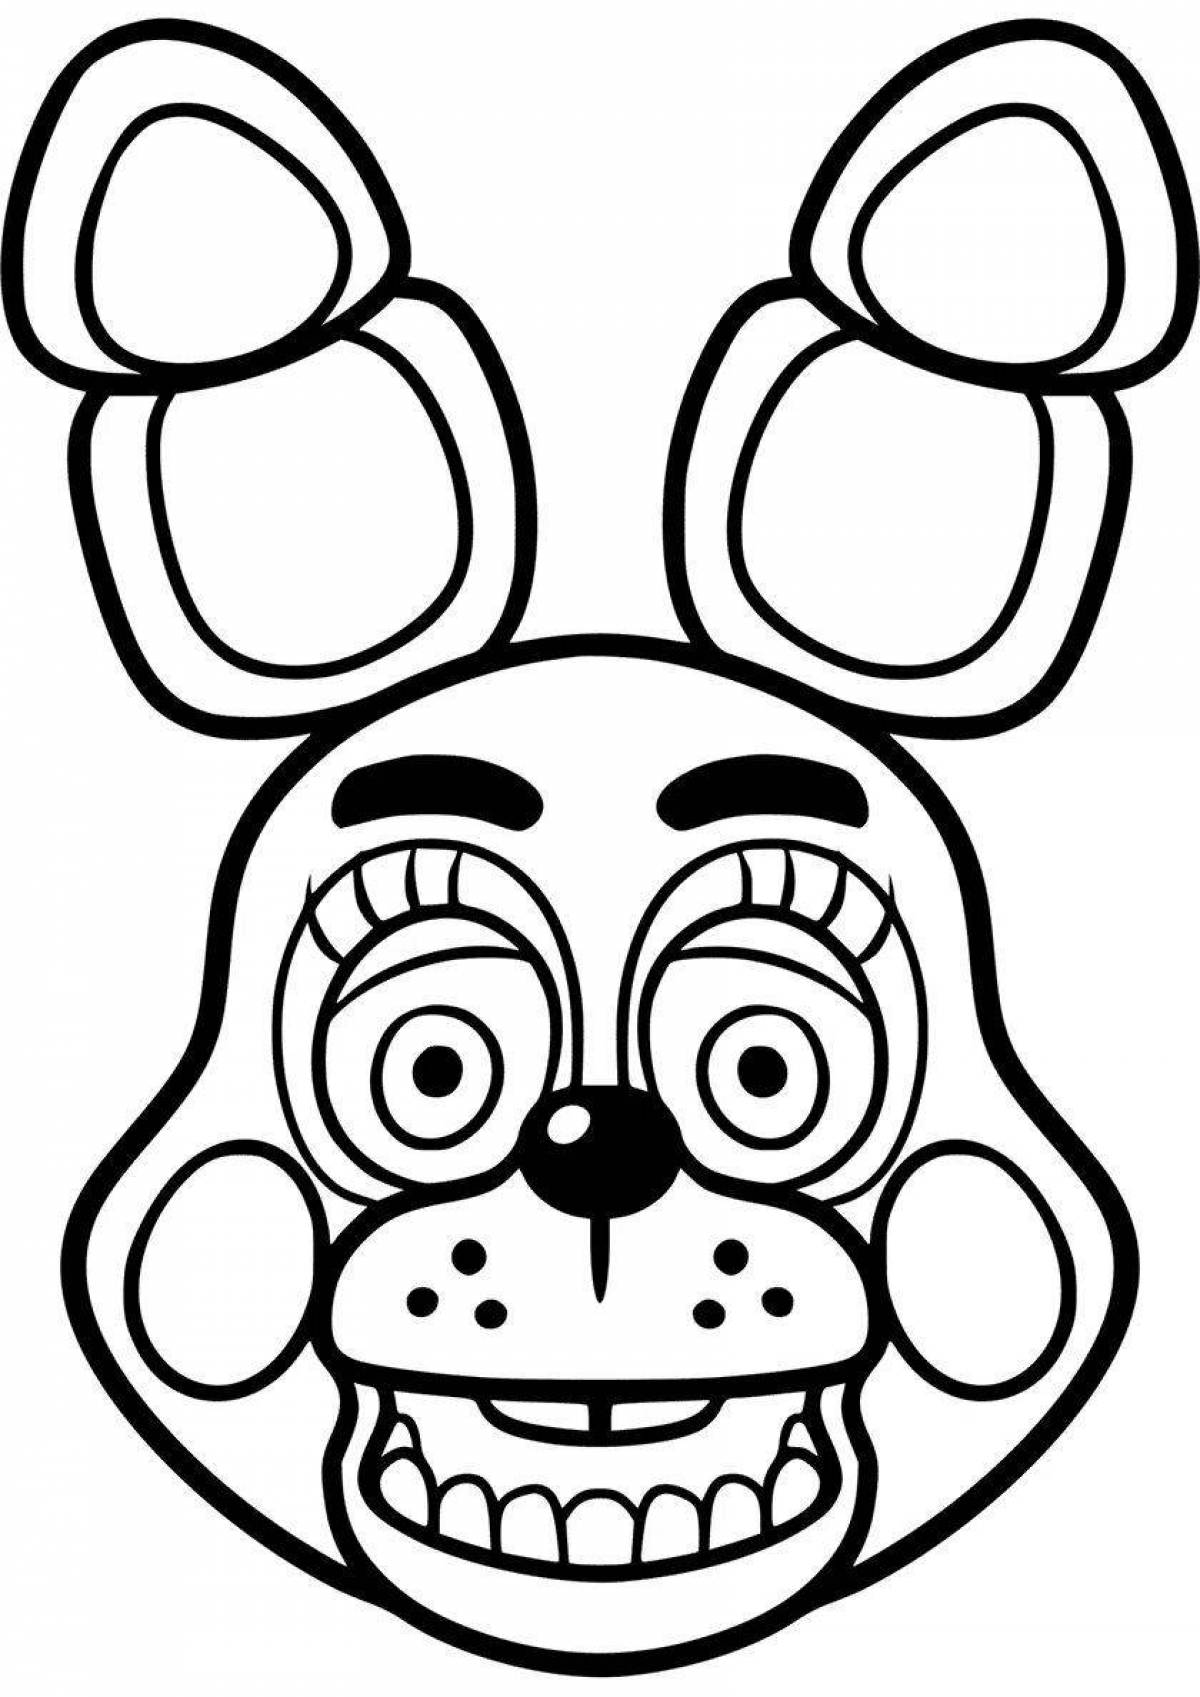 Радиант раскраска заяц аниматроник